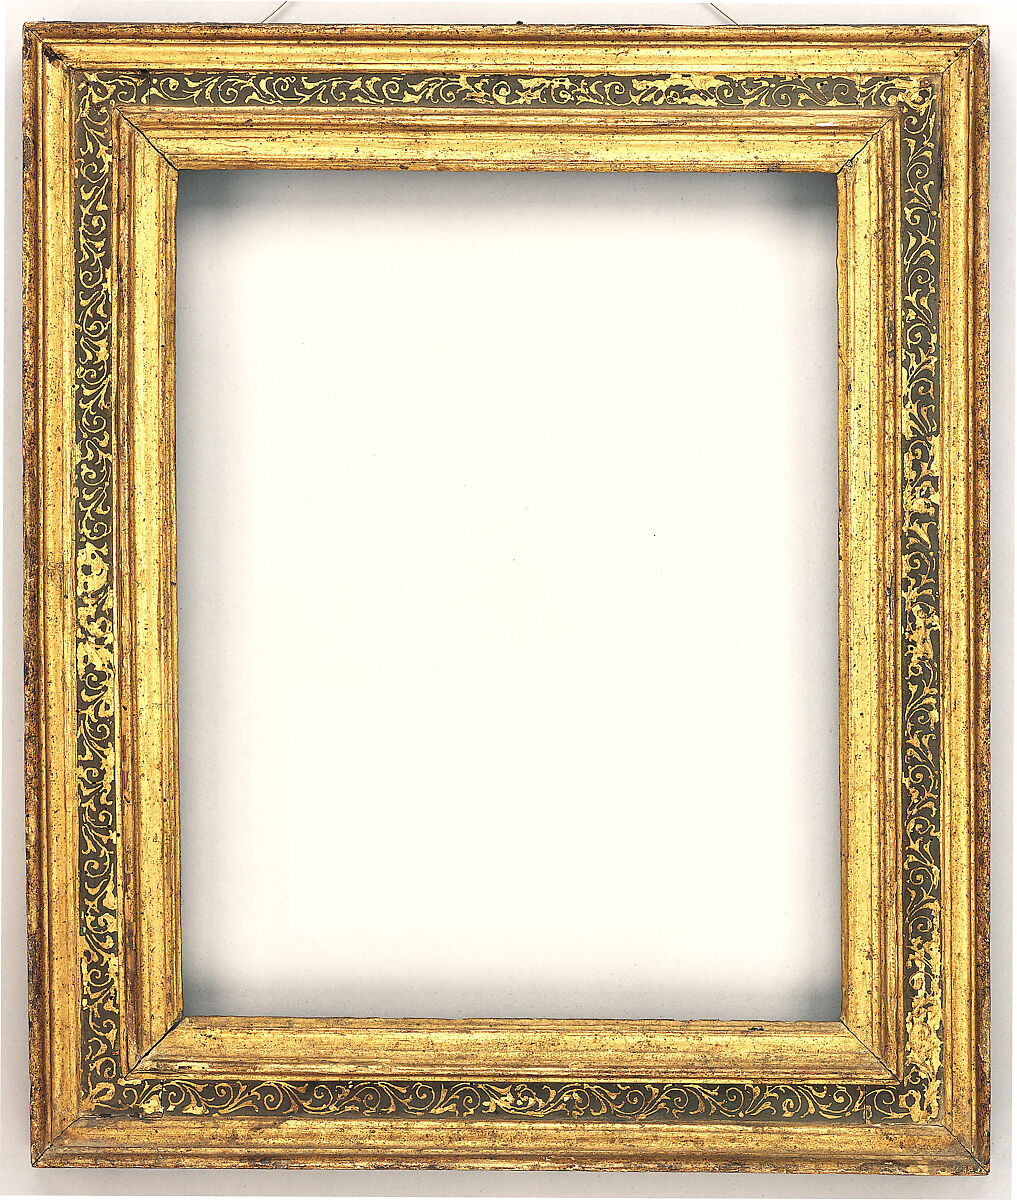 Cassetta frame, Gilt poplar, Italian, Venice 